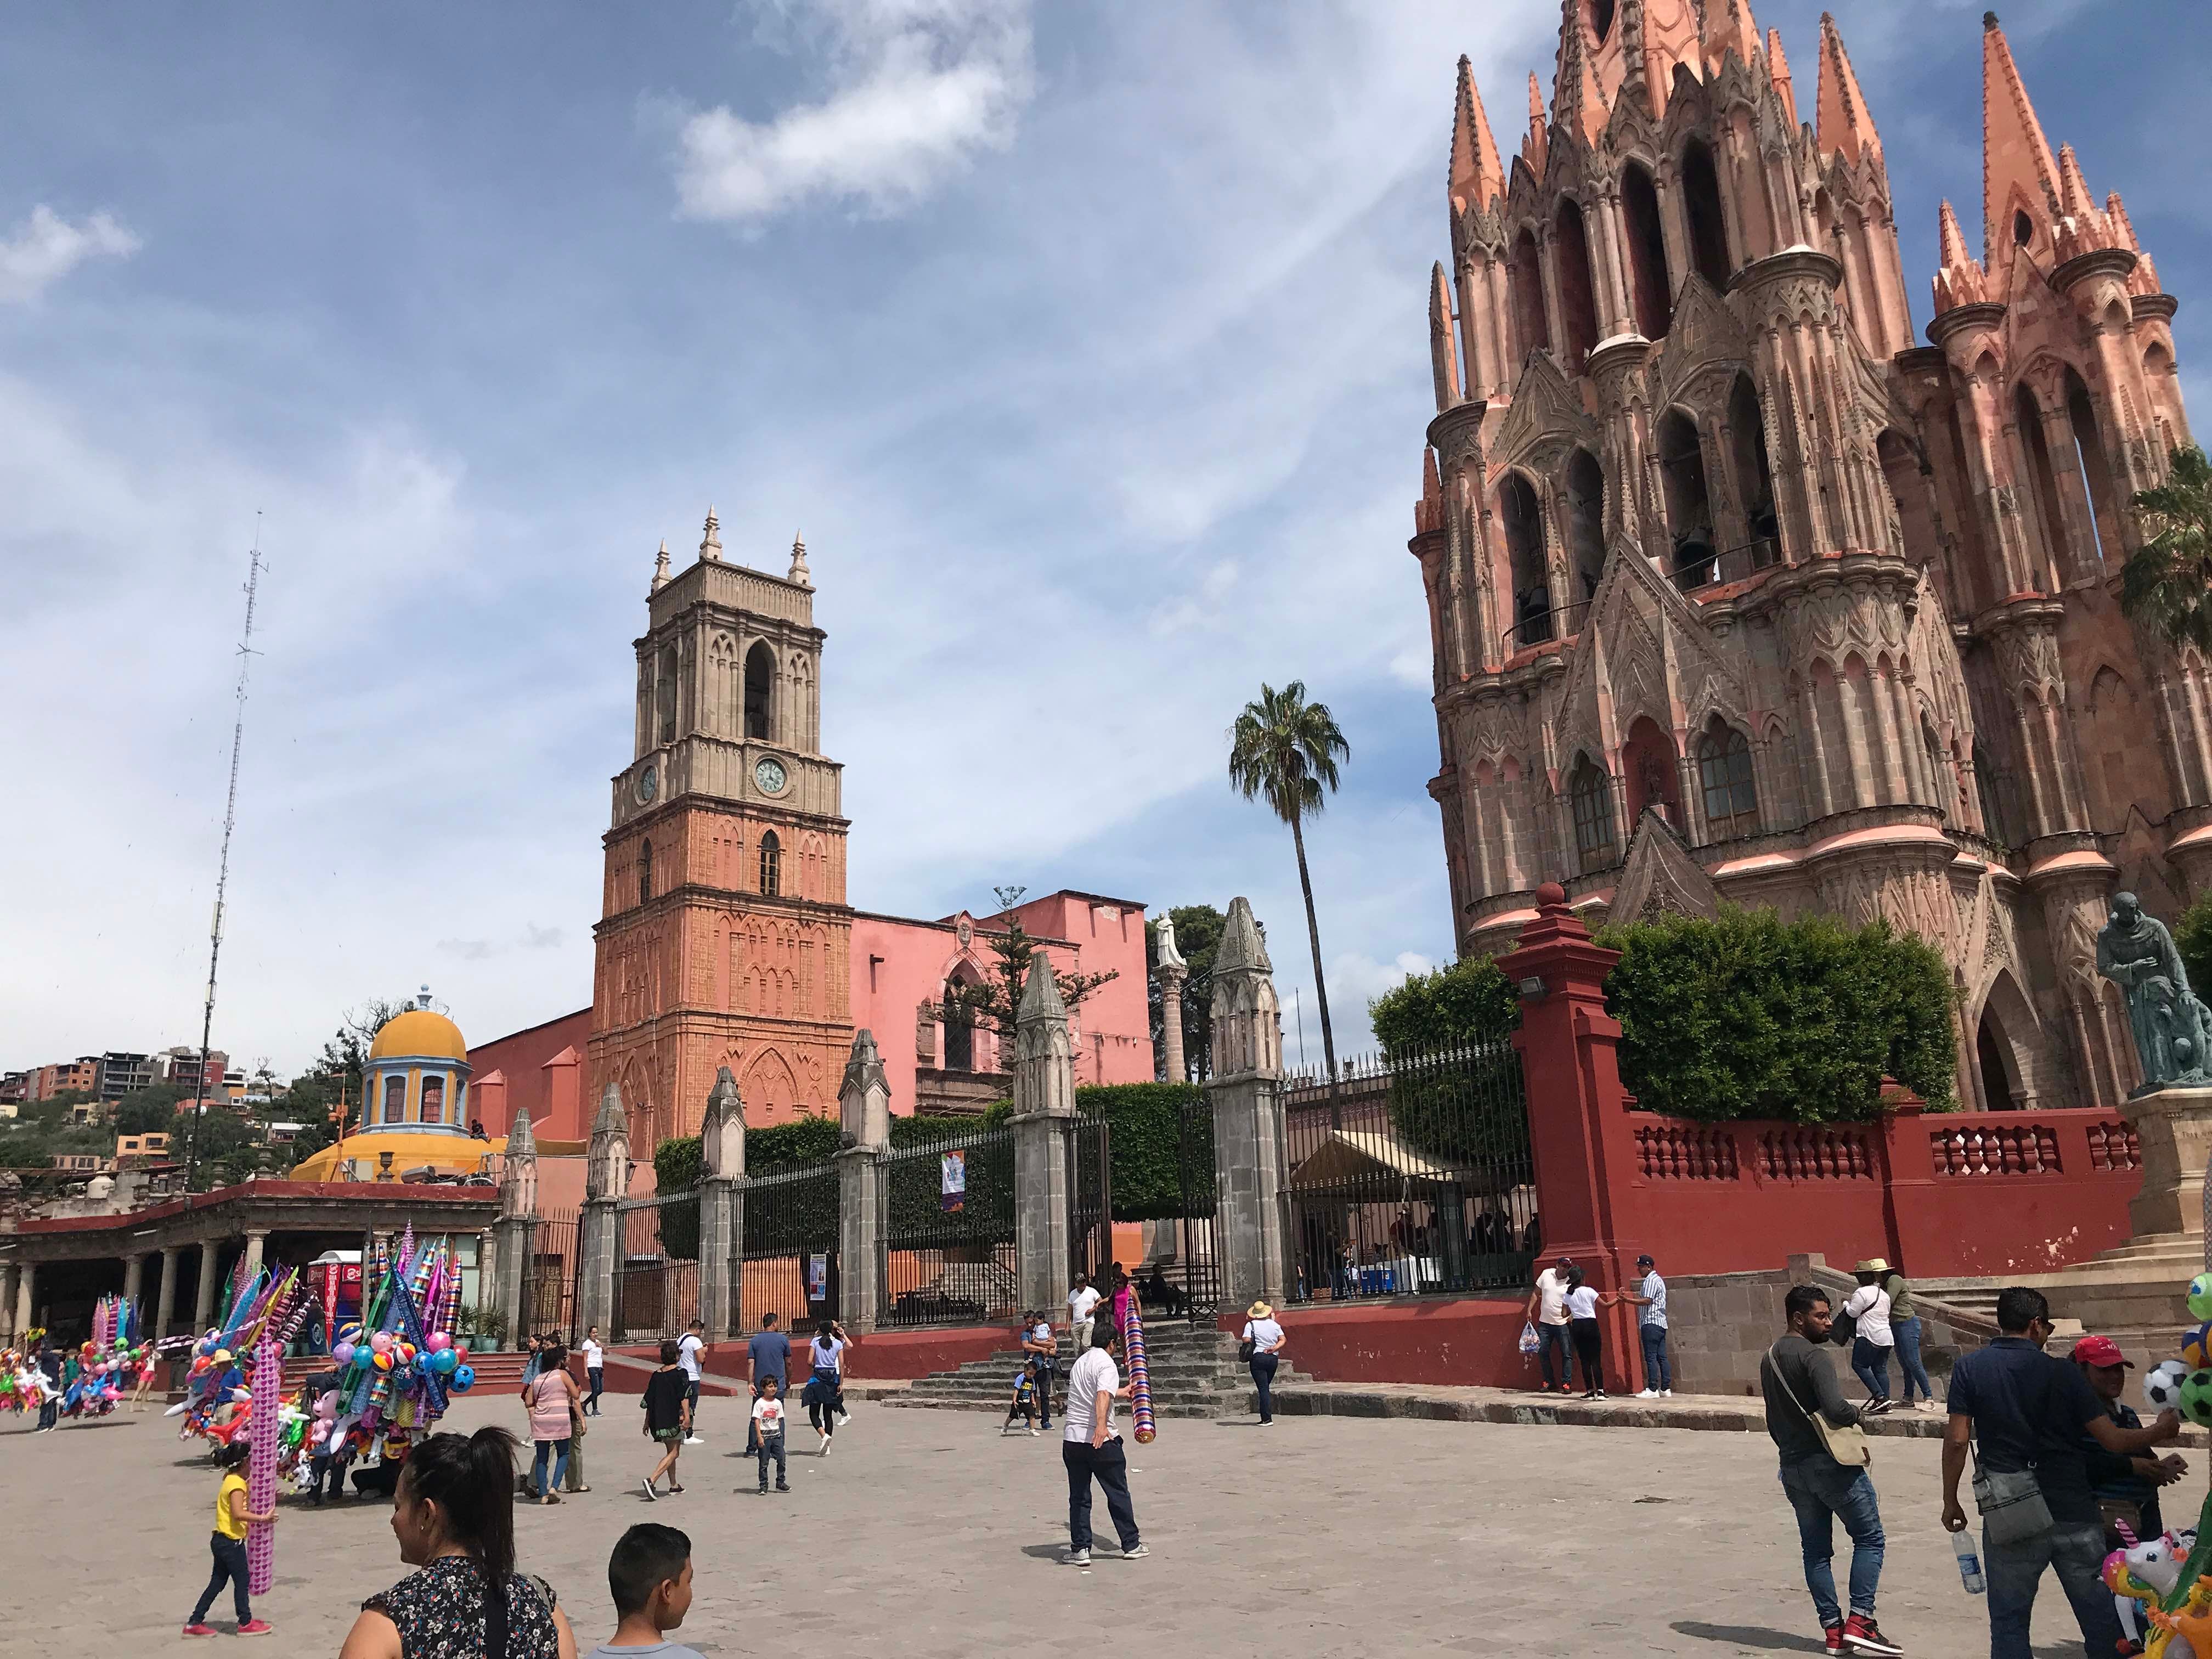 The main square in San Miguel de Allende